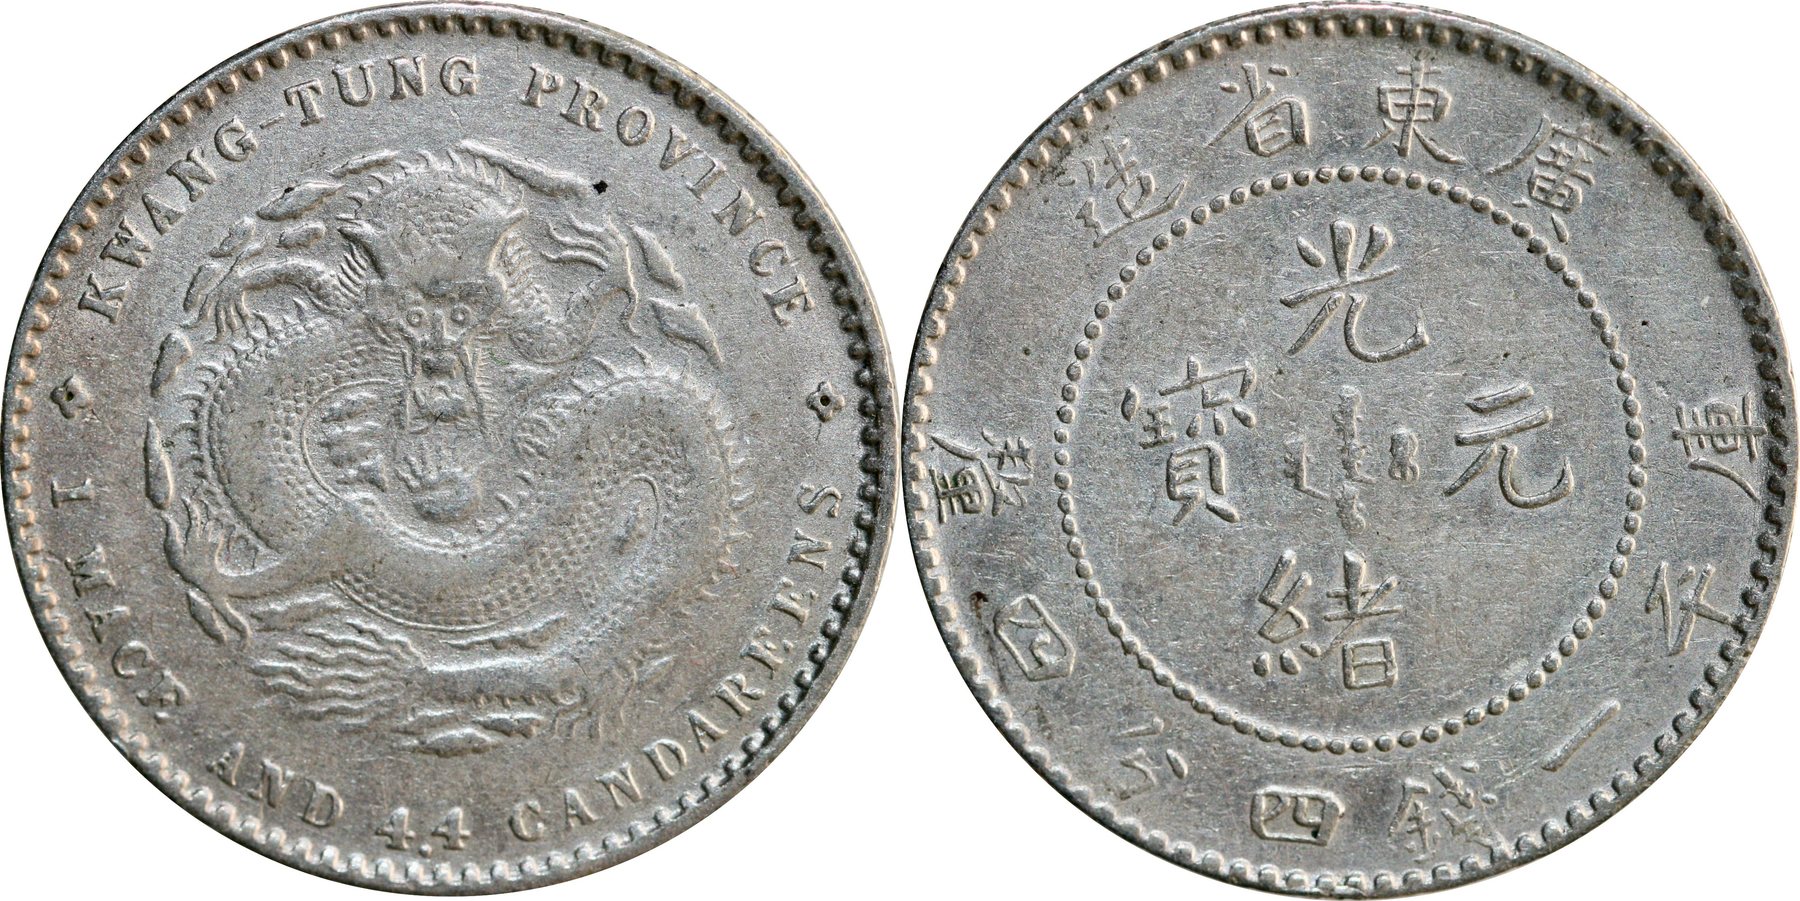 1900 евро. Китайская монета Kirin Province. Китай 1 Таэль 1885. Китай монета 1 доллар провинция Ching Kiang 7 Mace and 2 Candareens. Провинция Cheh Kiang Китай монеты.